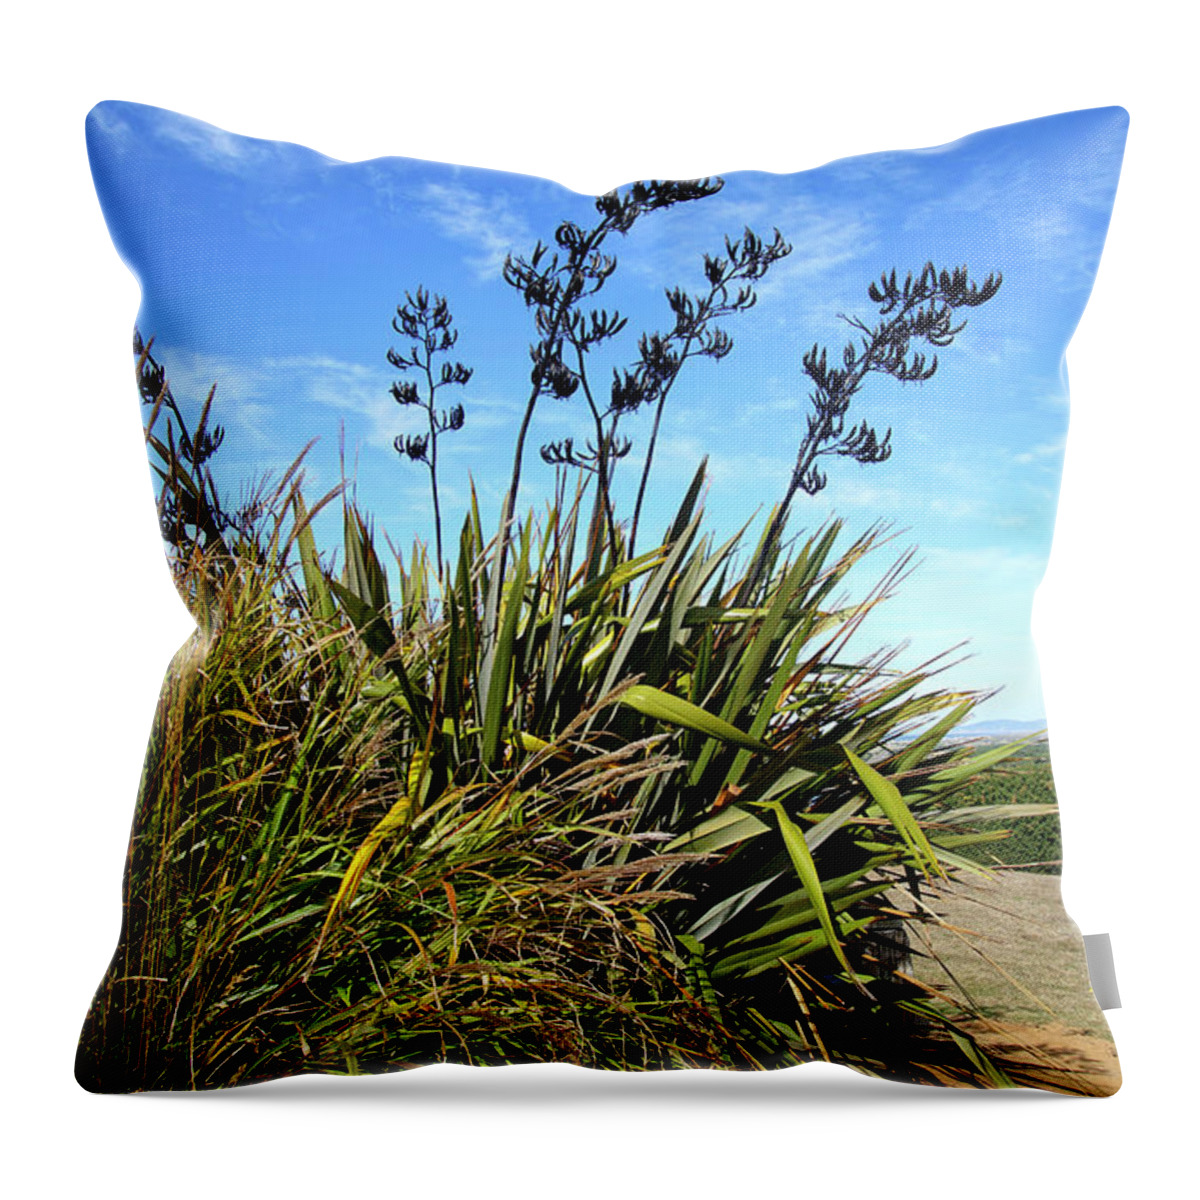 Oregon Throw Pillow featuring the photograph Tall pampas grass on a dune by Steve Estvanik